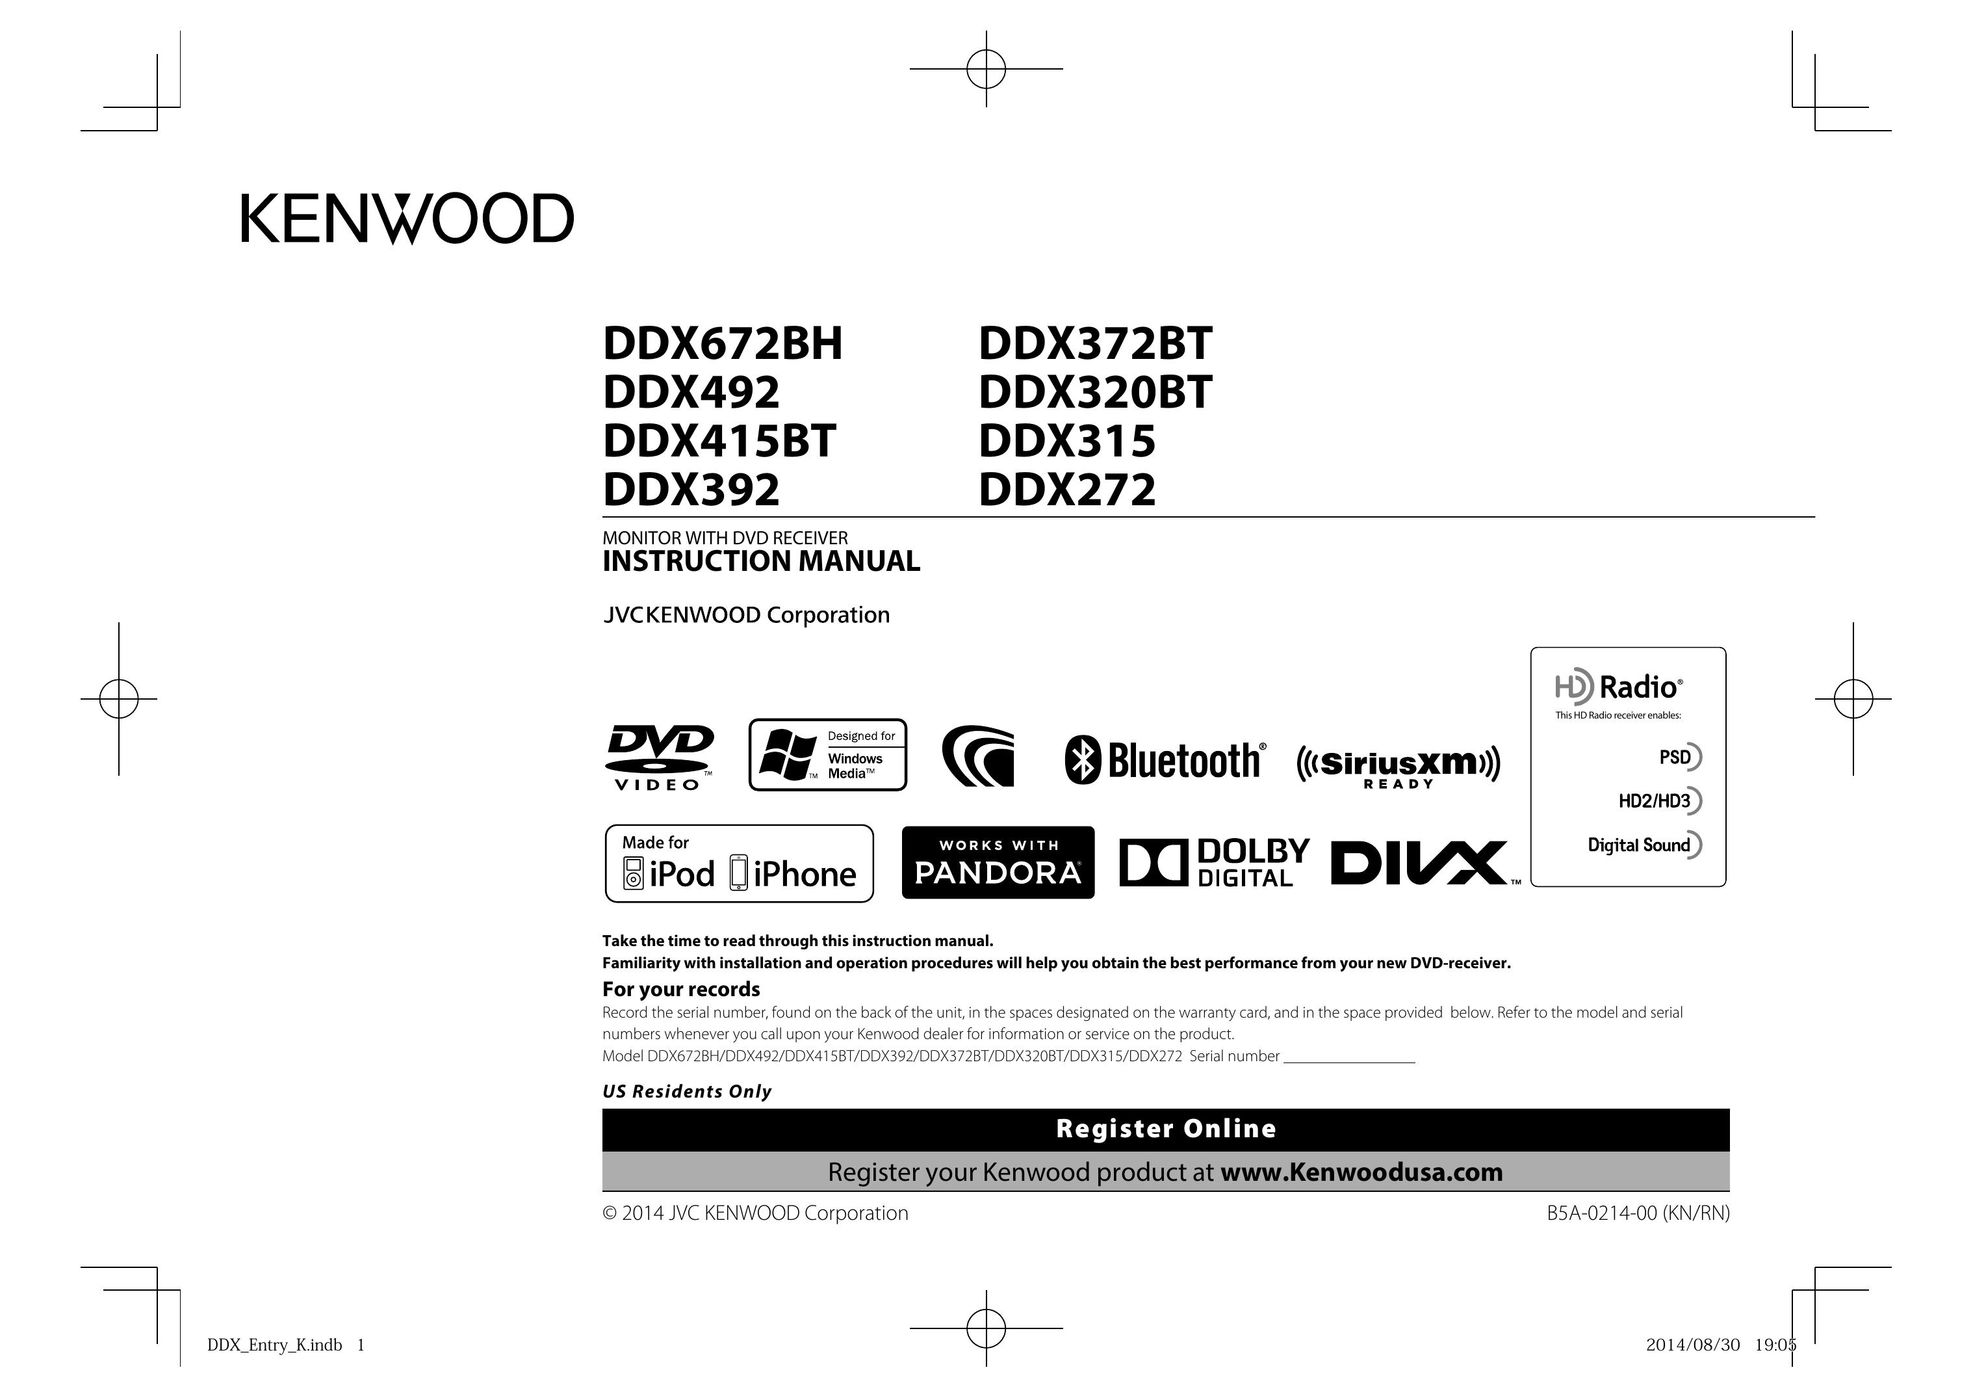 Kenwood DDX392 Car Video System User Manual